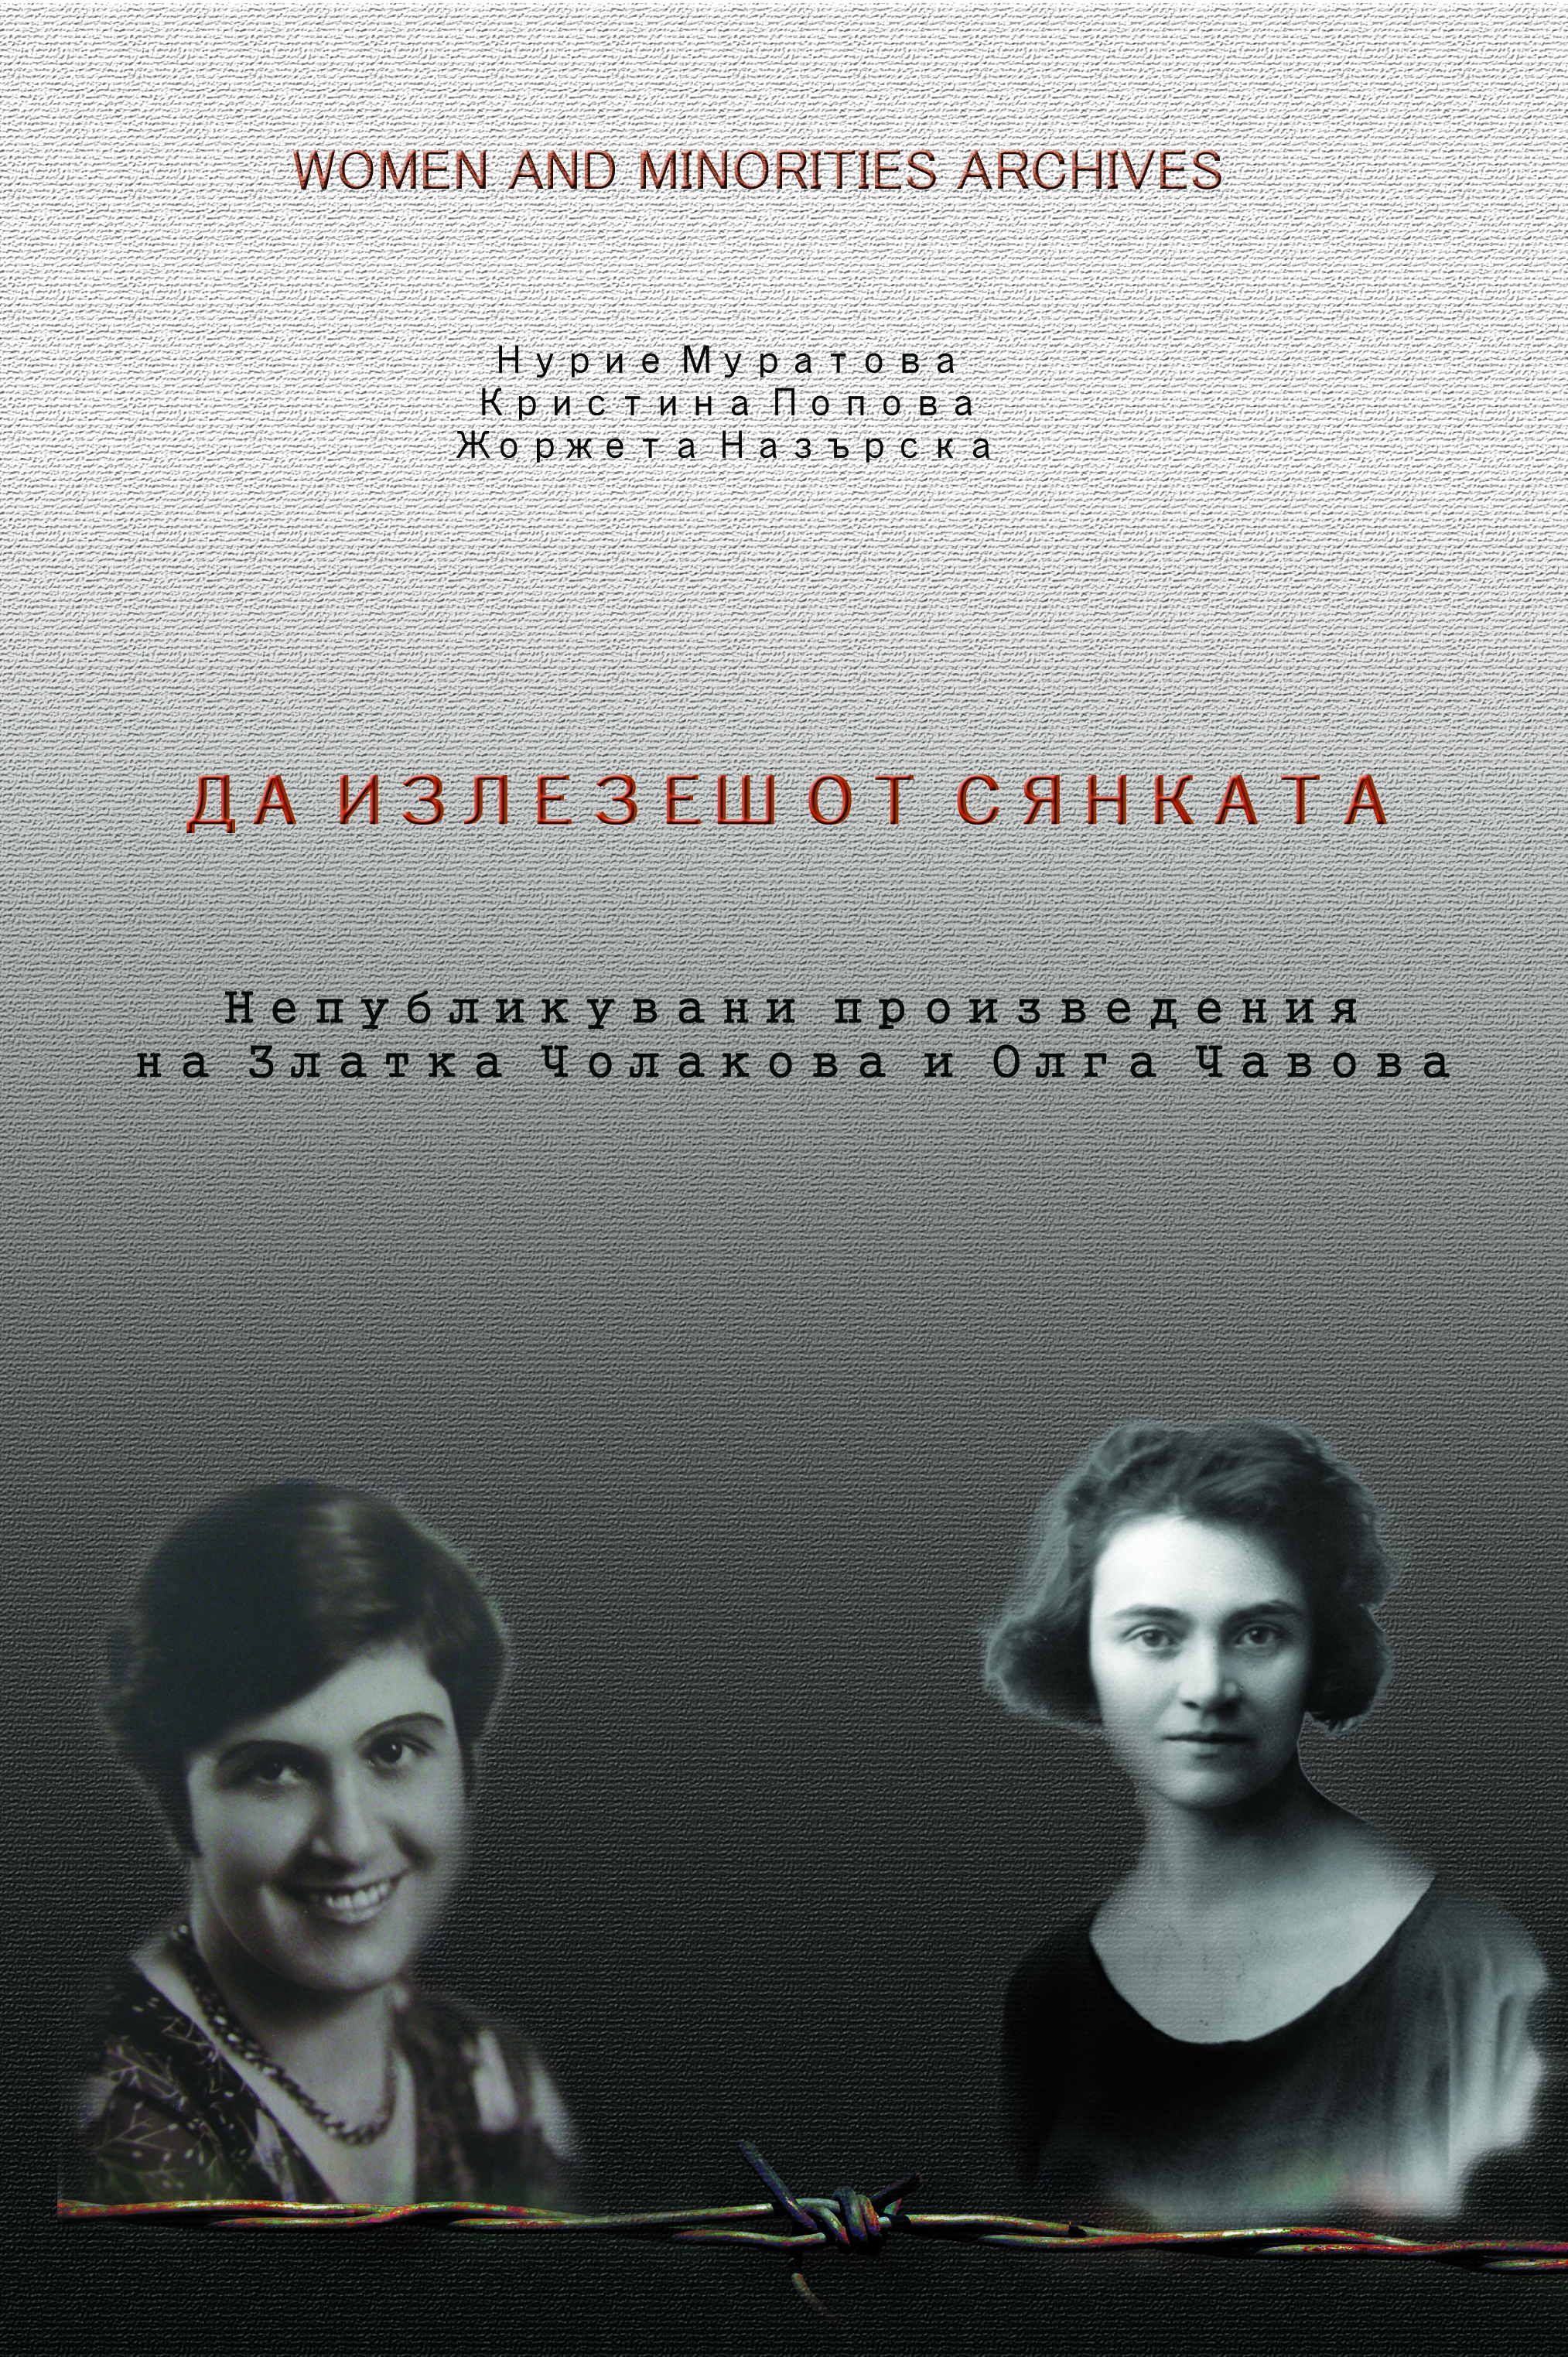 Zlatka Cholakova (1899-1985). The “hidden” archives of women Cover Image